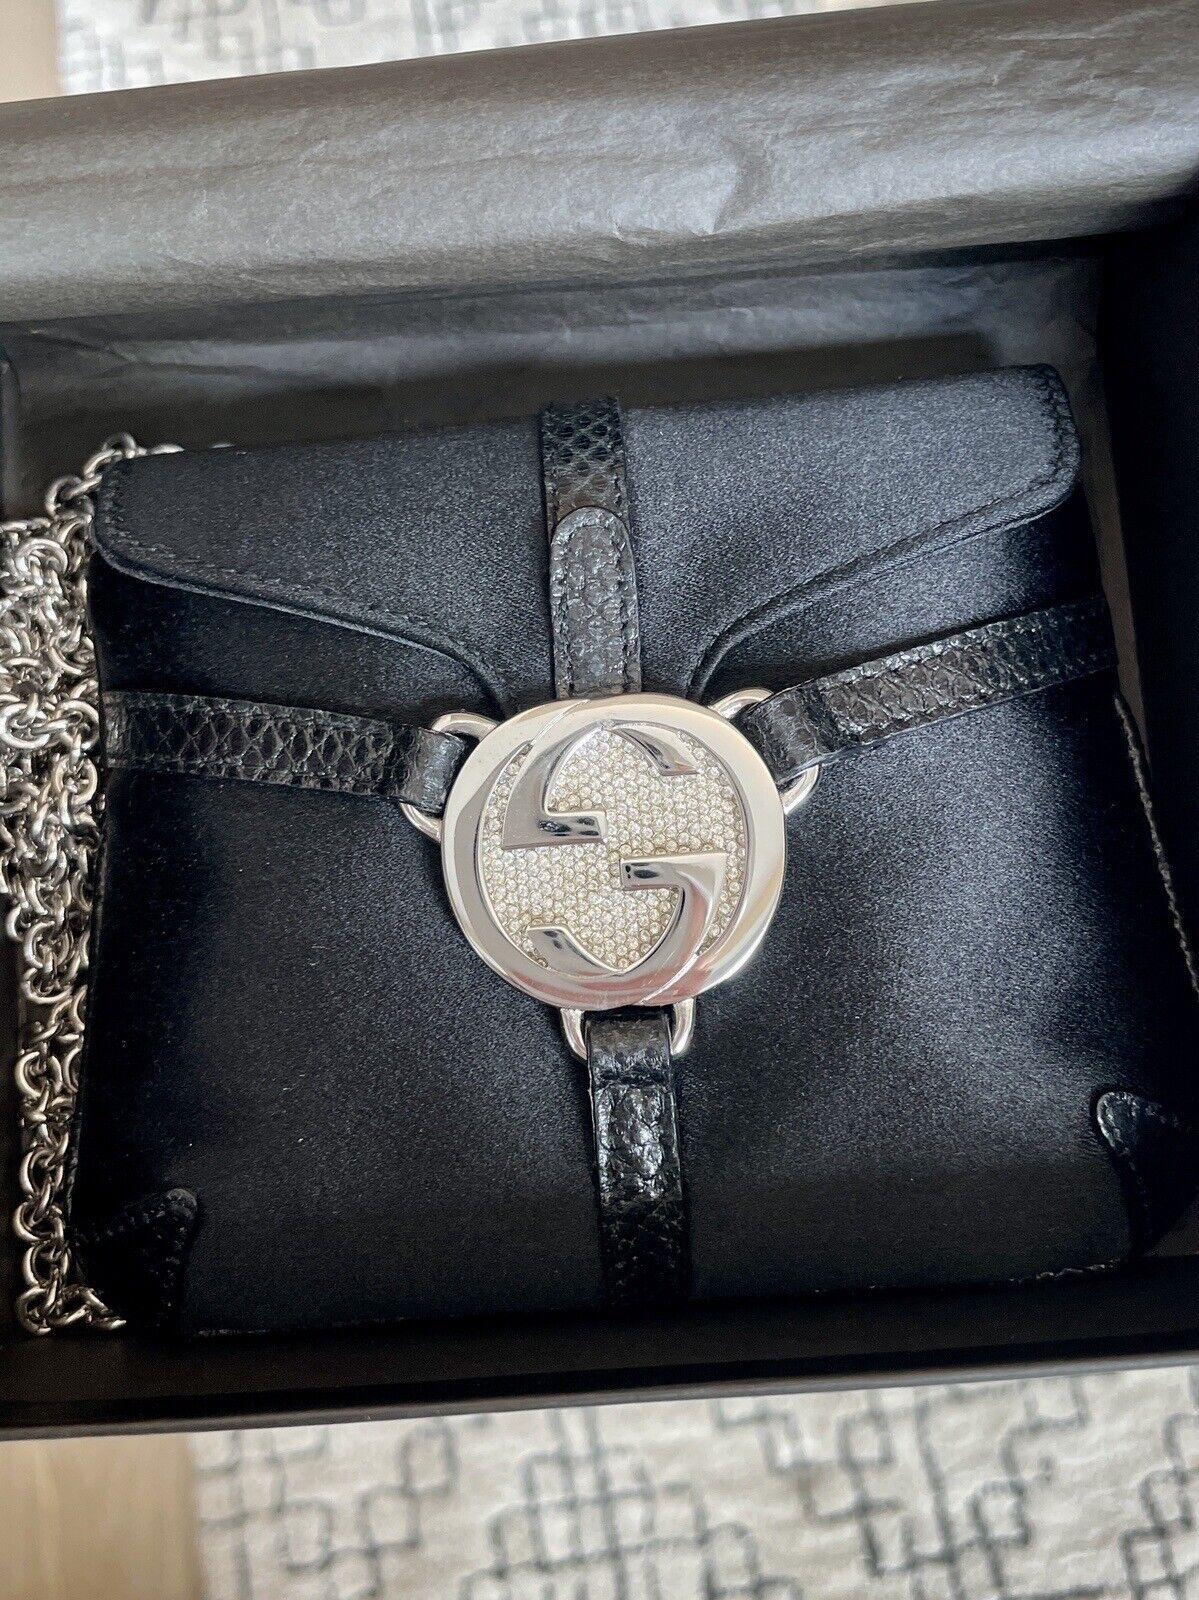 GUCCI by TOM FORD Vintage Swarovski Crystal Mini Evening Bag In New Condition For Sale In Leonardo, NJ